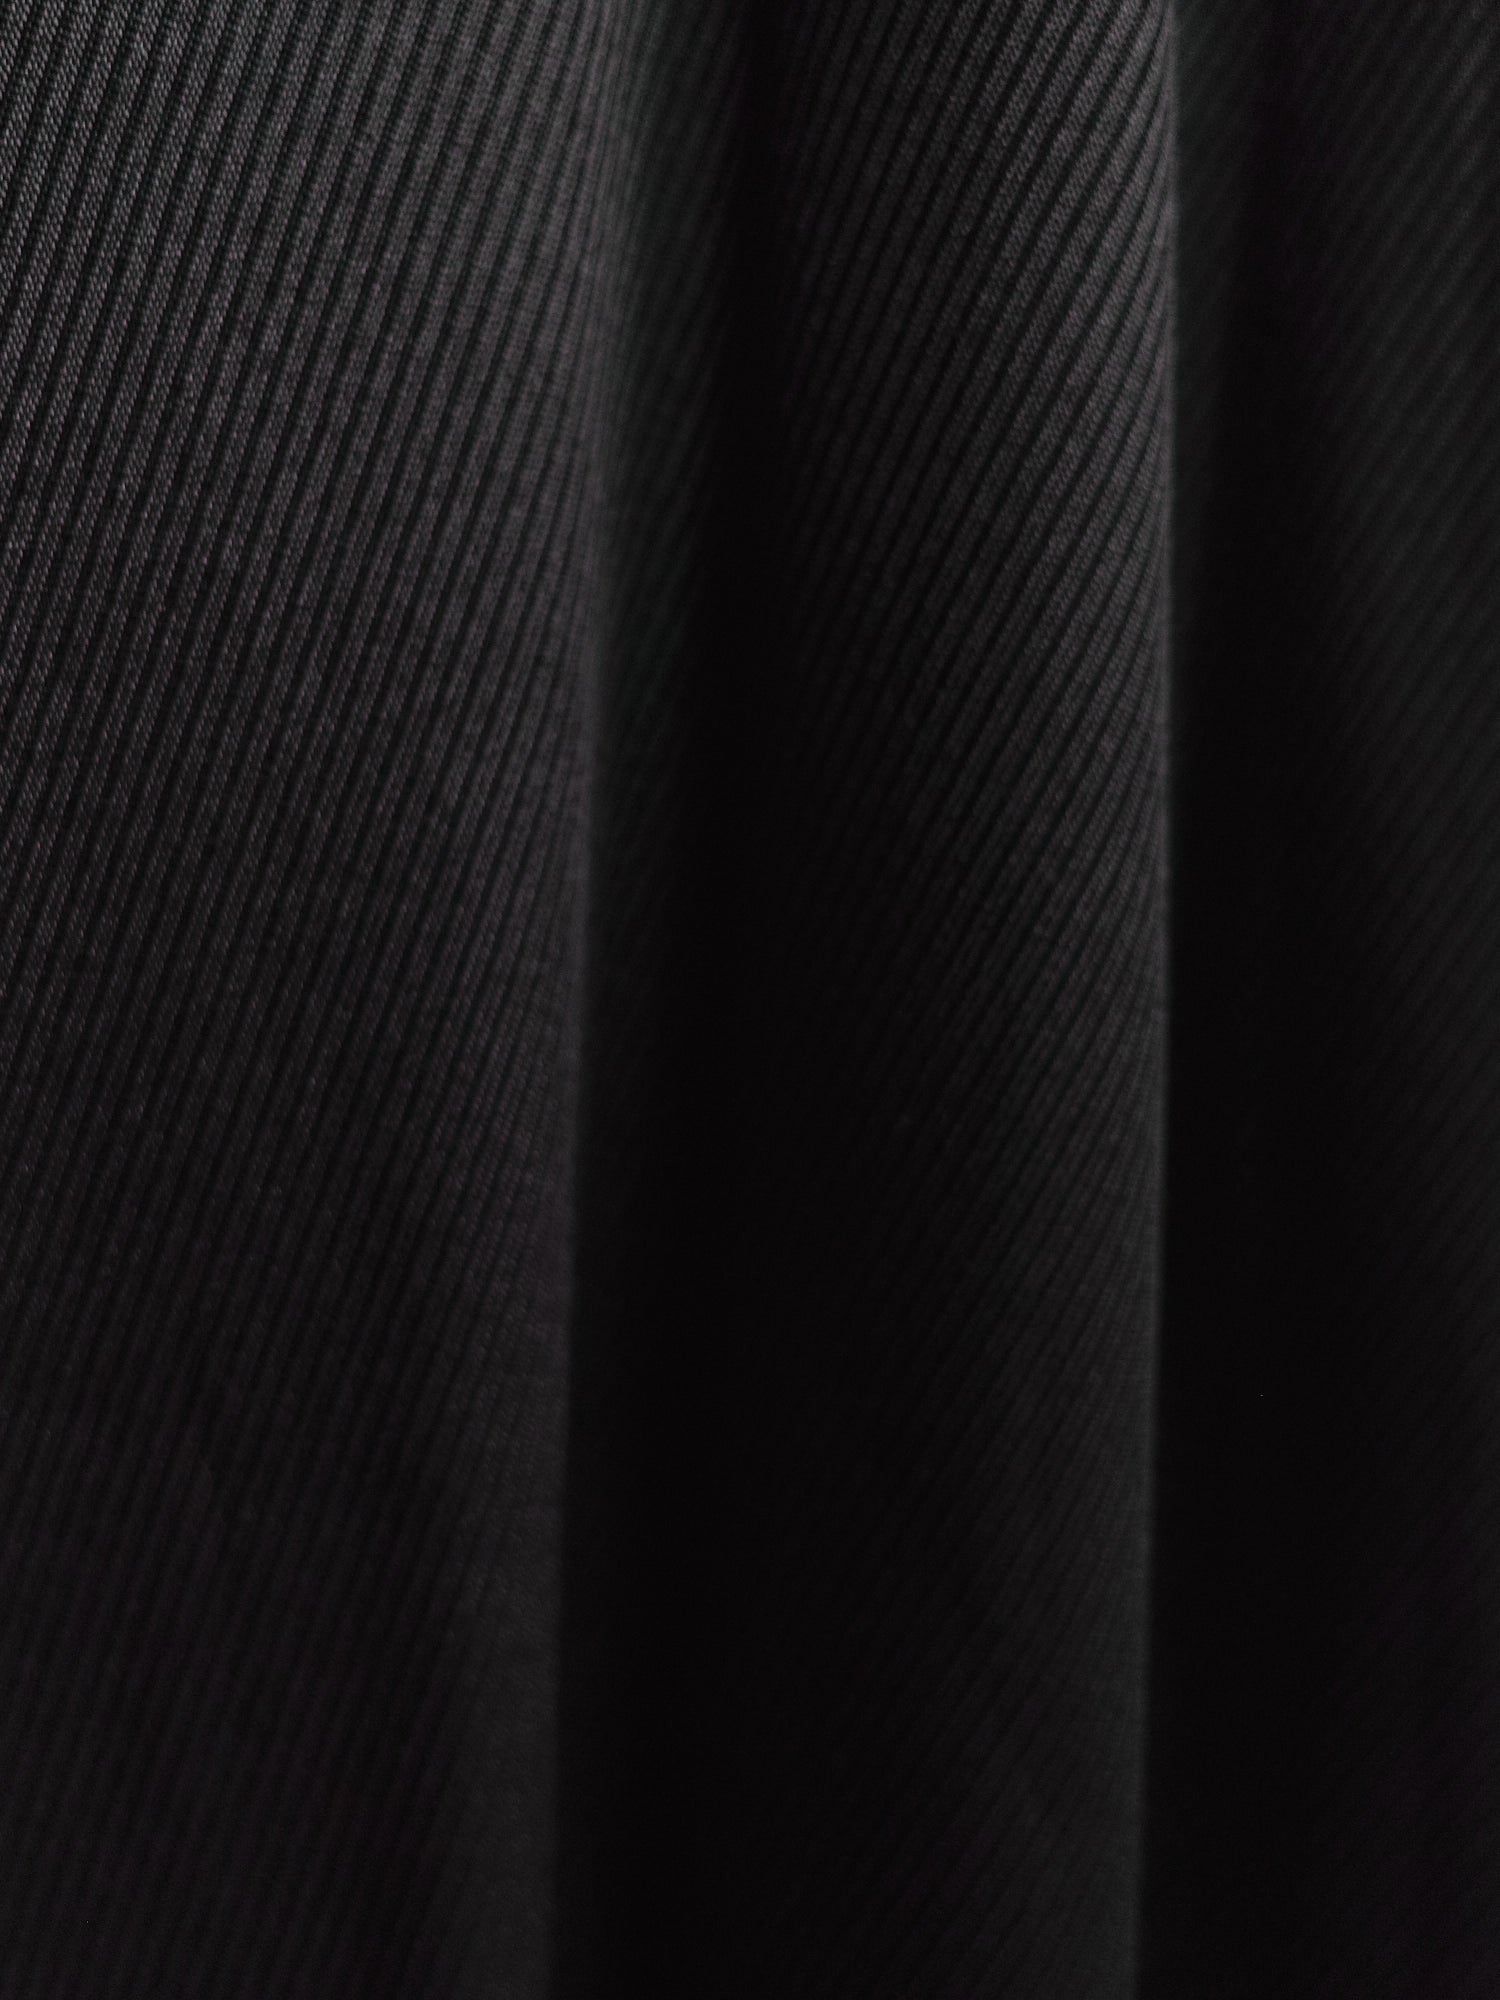 Y's Yohji Yamamoto AW1999 black poly rayon short sleeve maxi dress - approx M L